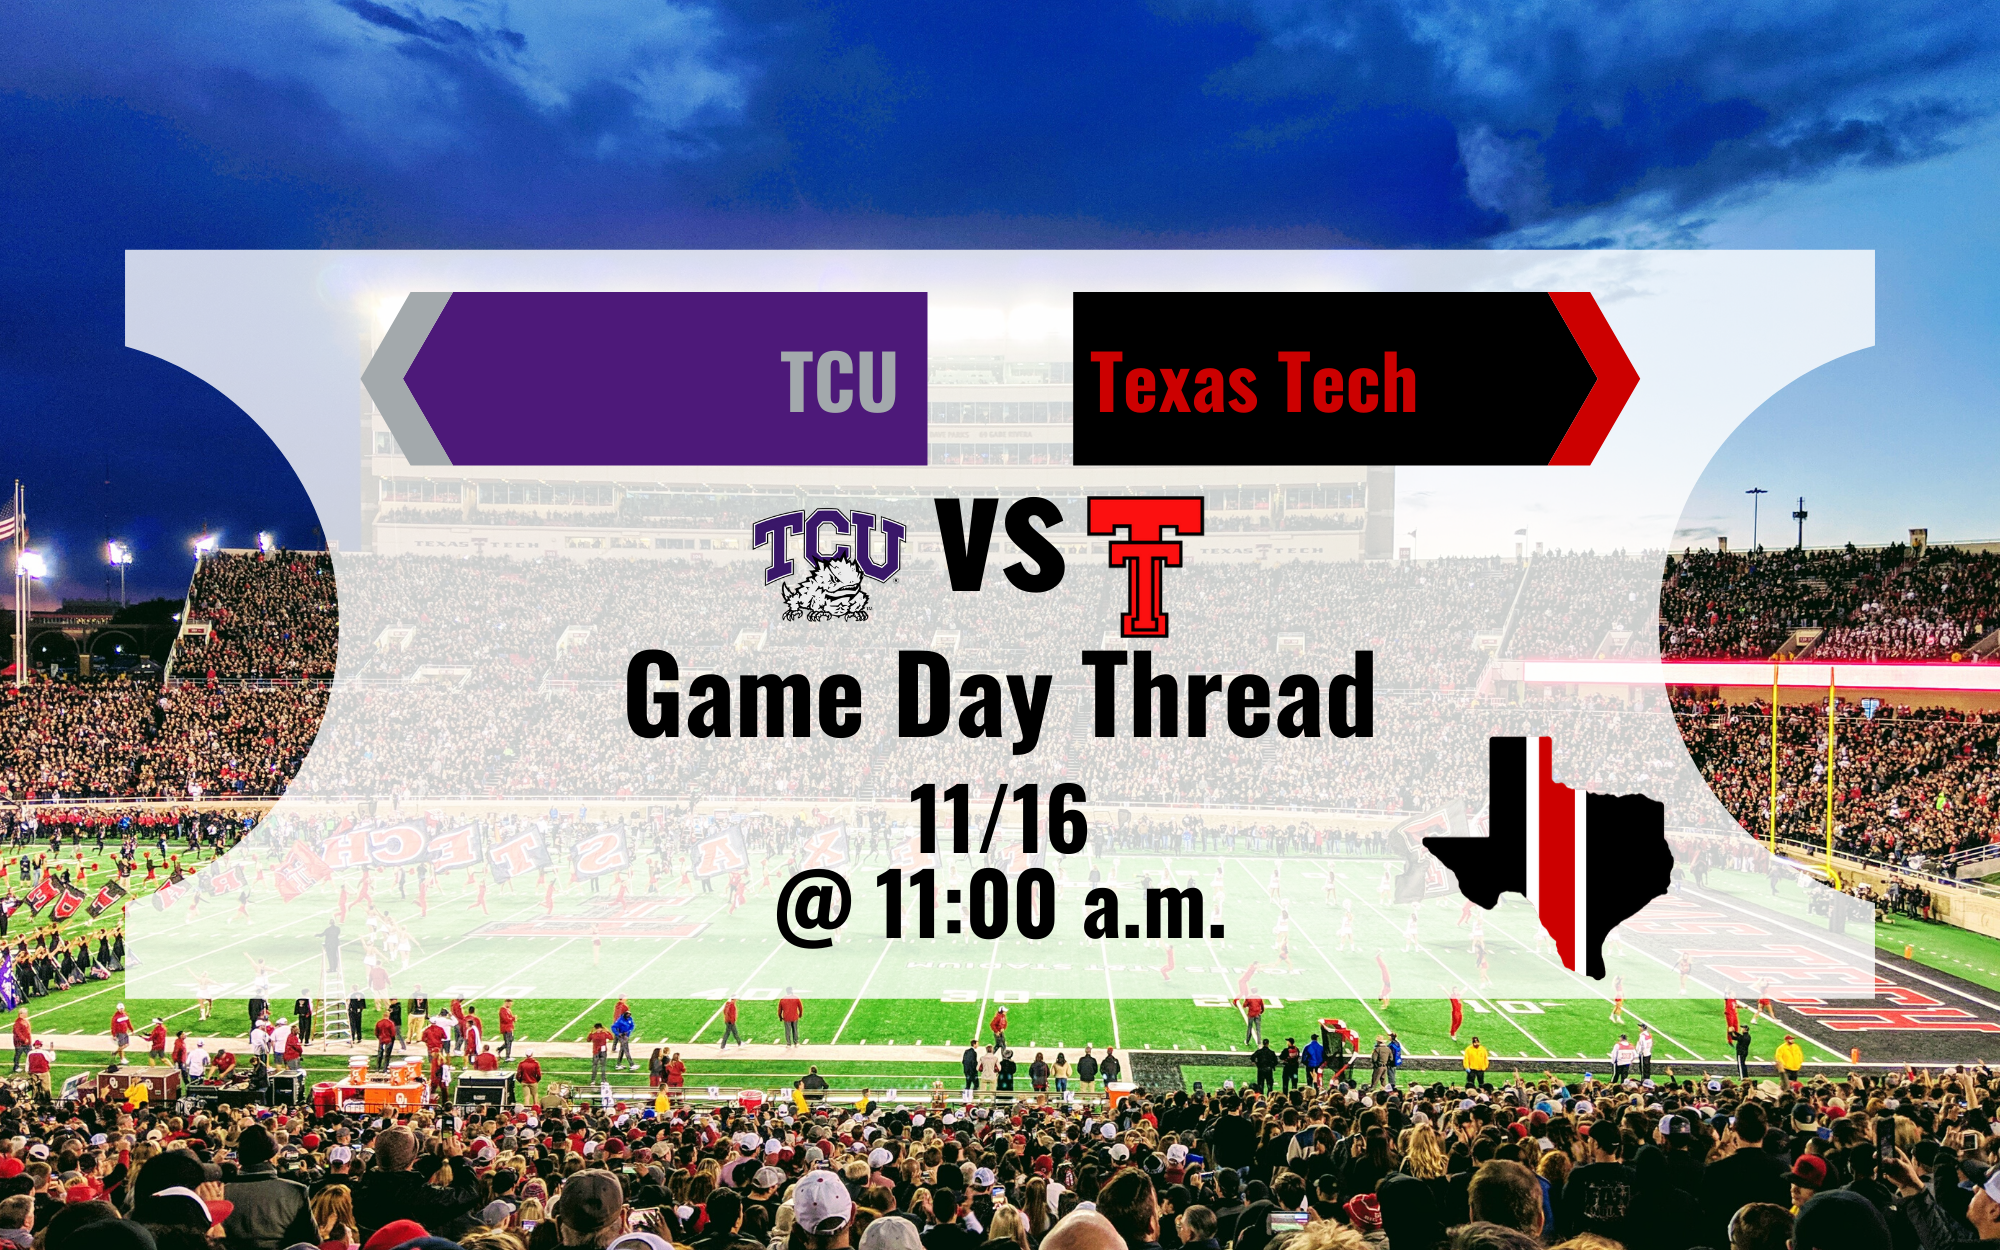 Game Day Thread 4: TCU vs. Texas Tech